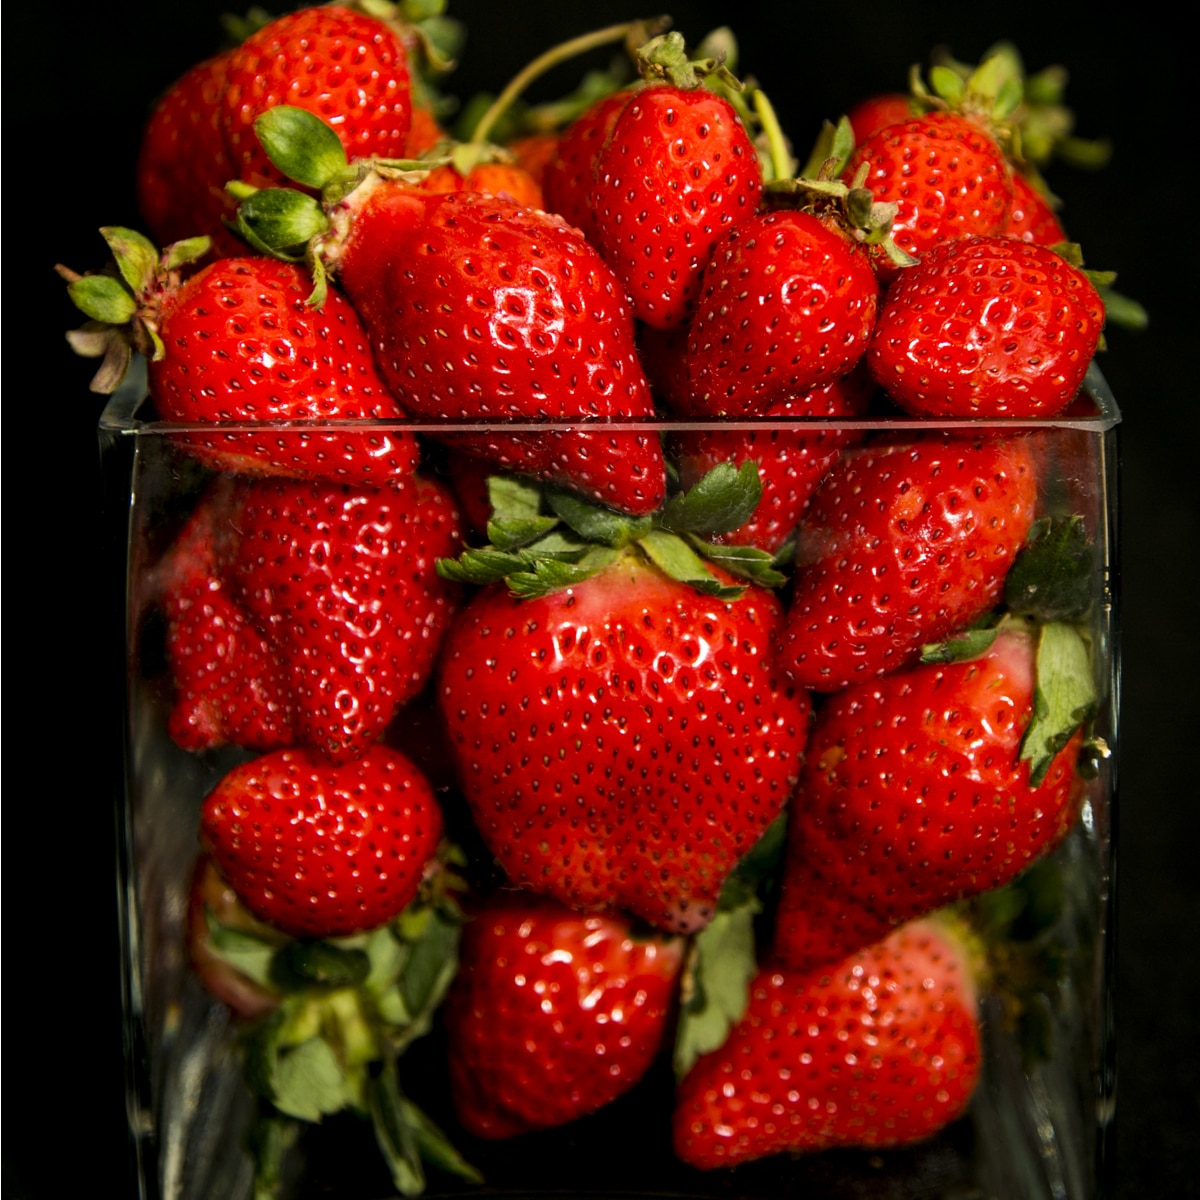 Caridal strawberries in glass black background